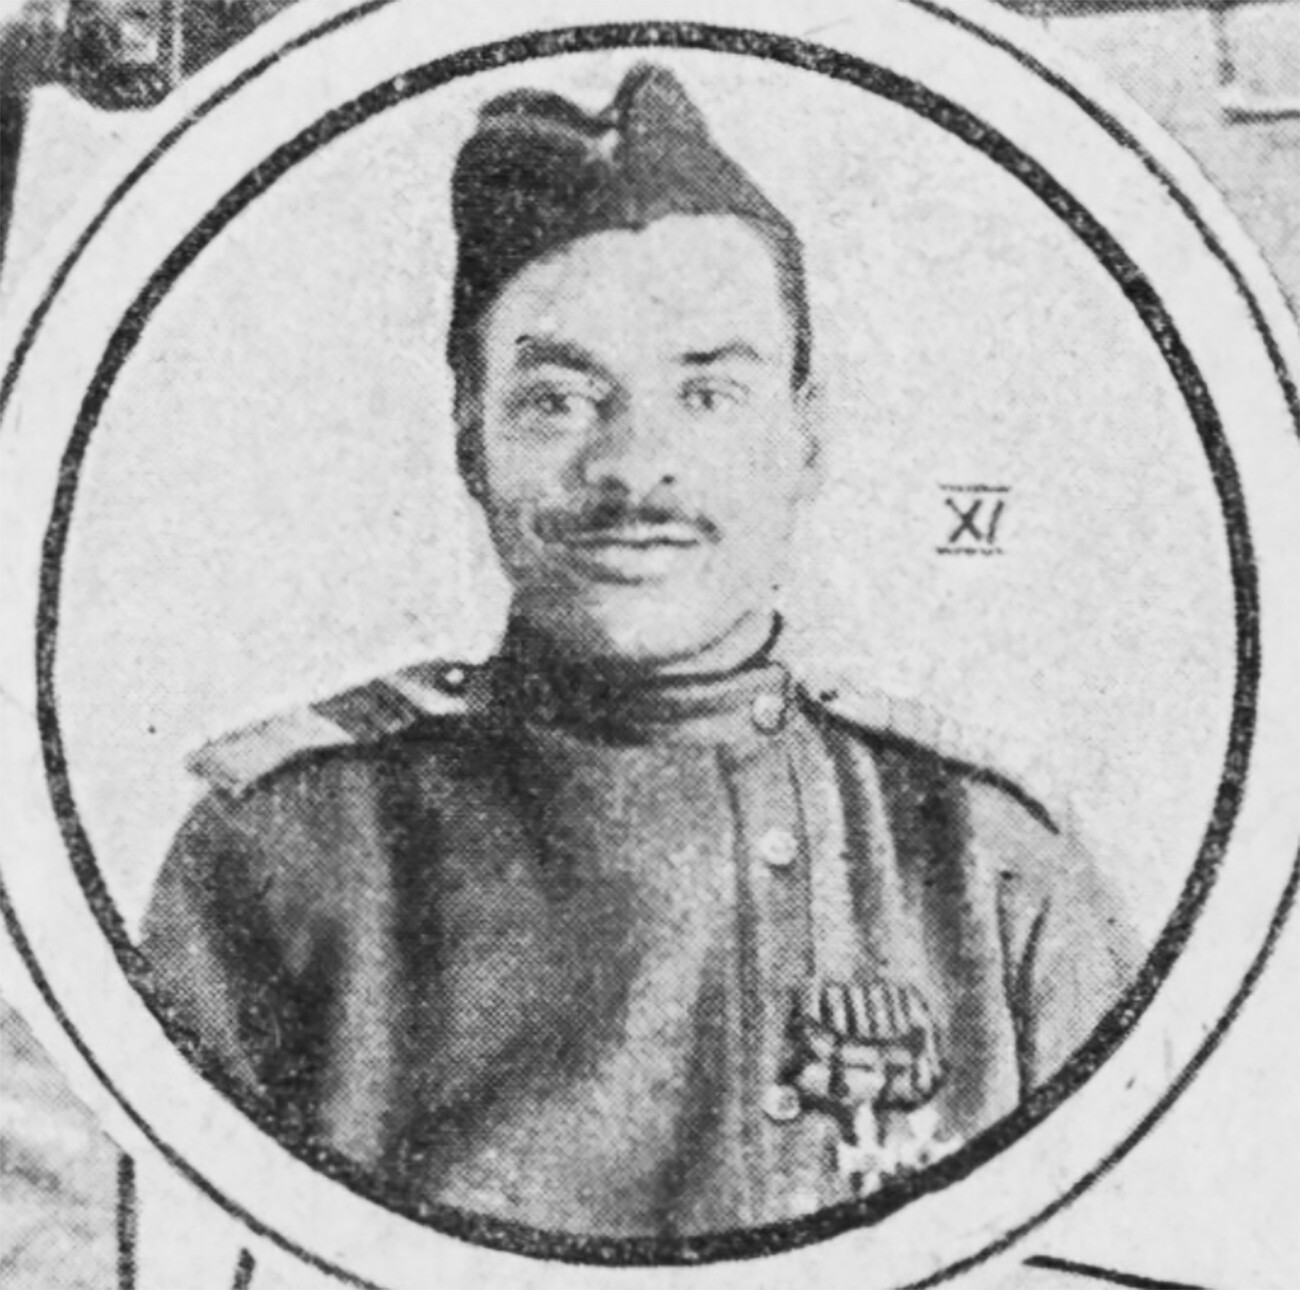 Marcel Pilat photographed for 'Ogonyok' magazine in 1916